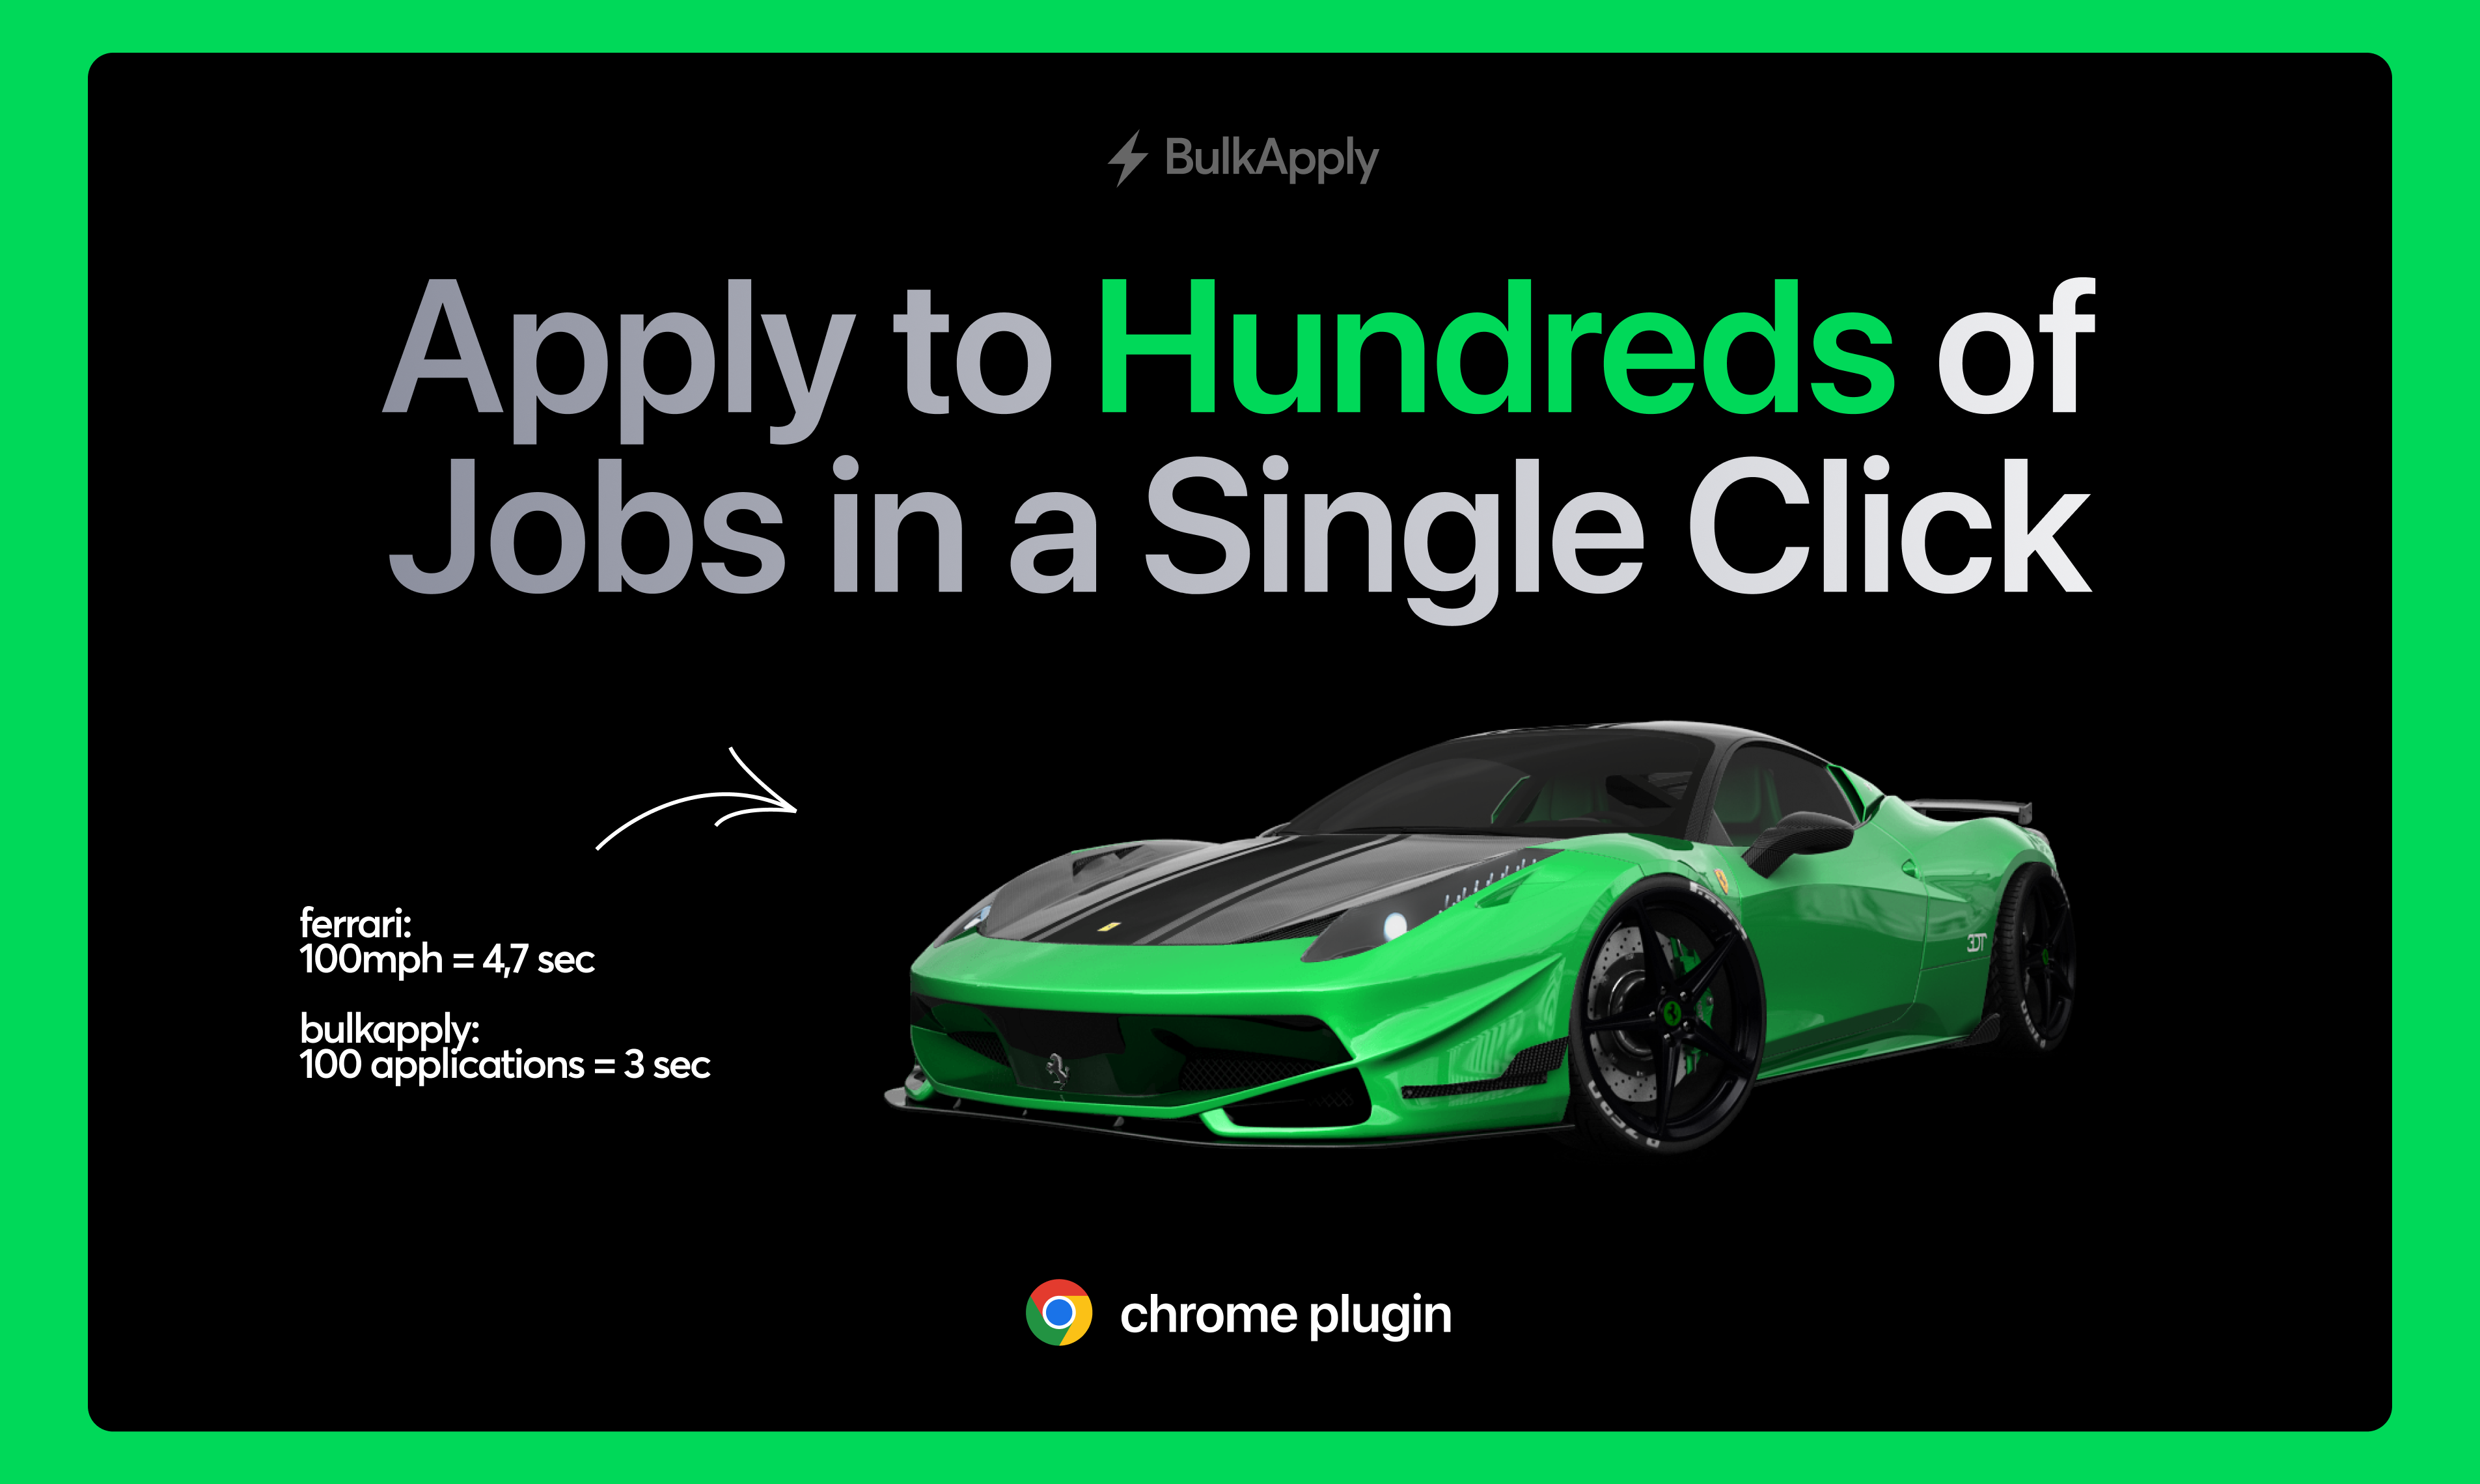 bulkapply - Apply to hundreds of jobs in a single click